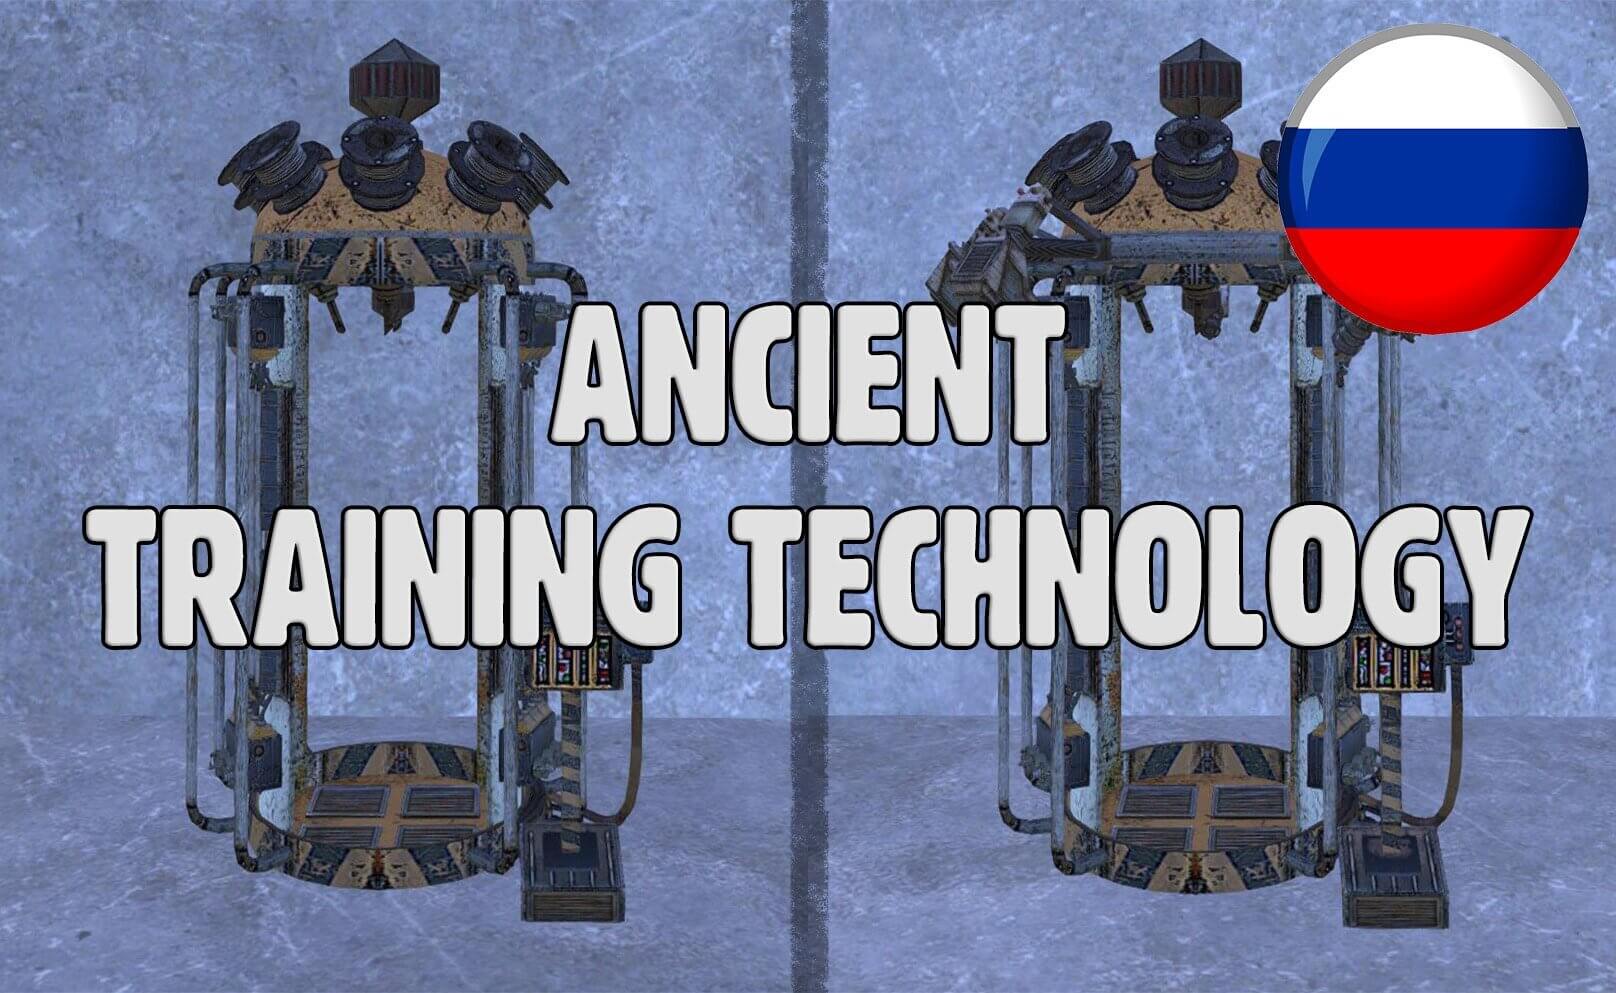 Ancient Training Technology - Древняя технология обучения (RU)